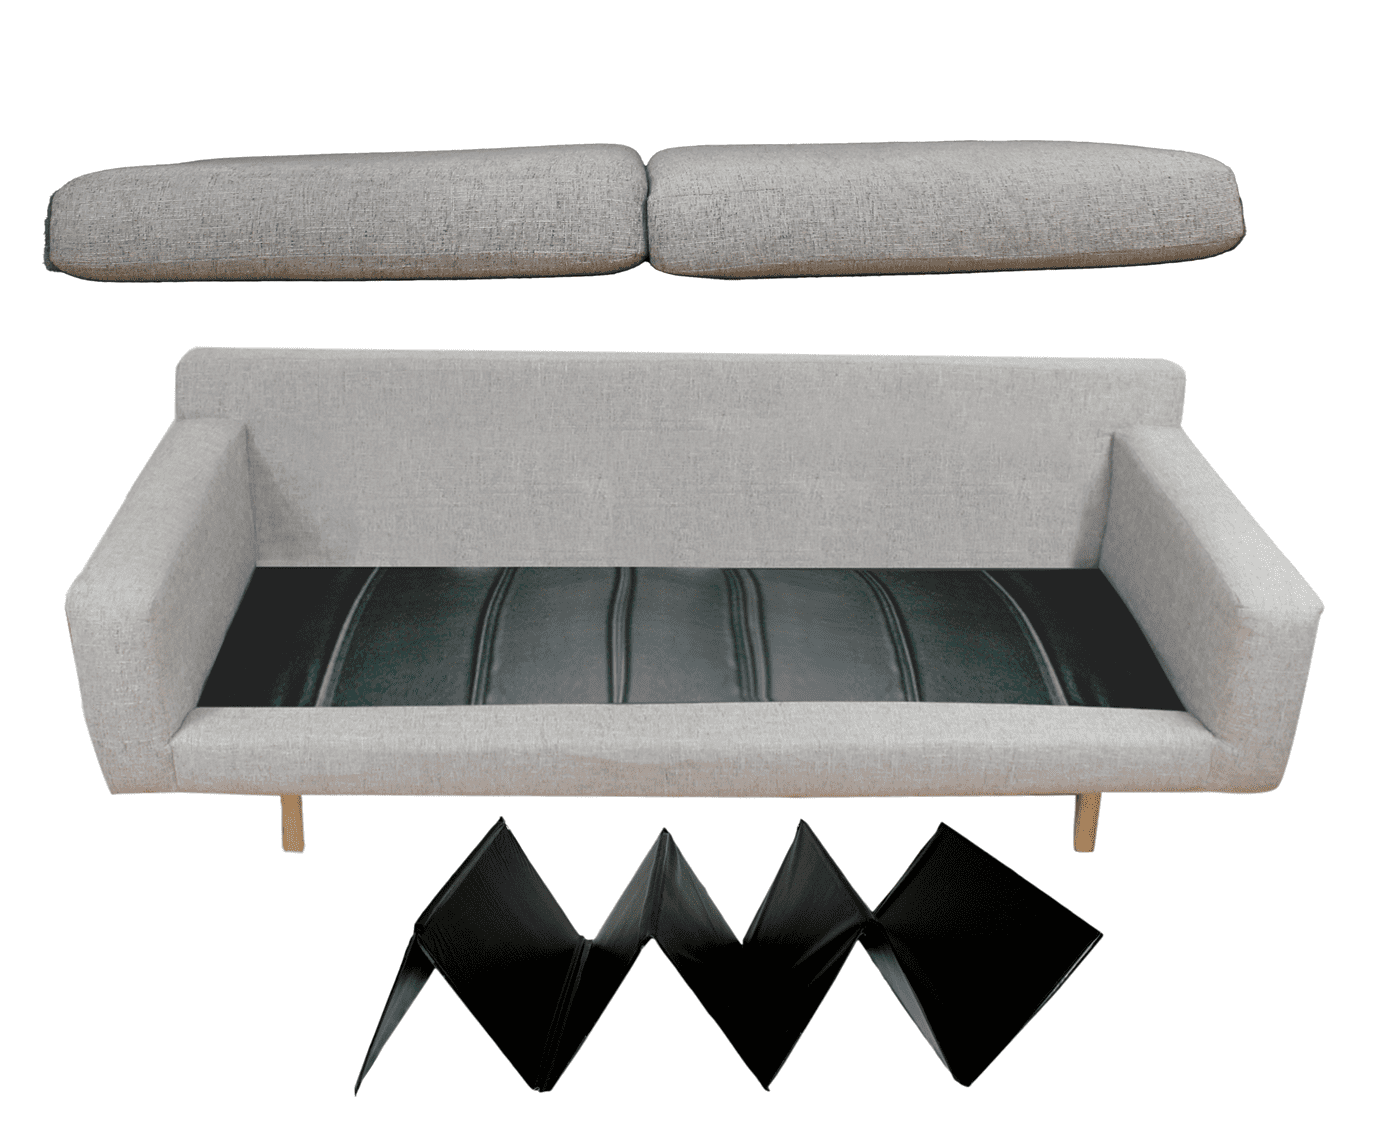  Stratiform Original Curve, 20x20 in 3-Pack - Medium, Elevate Comfort, Living Room Sofa Sag Support